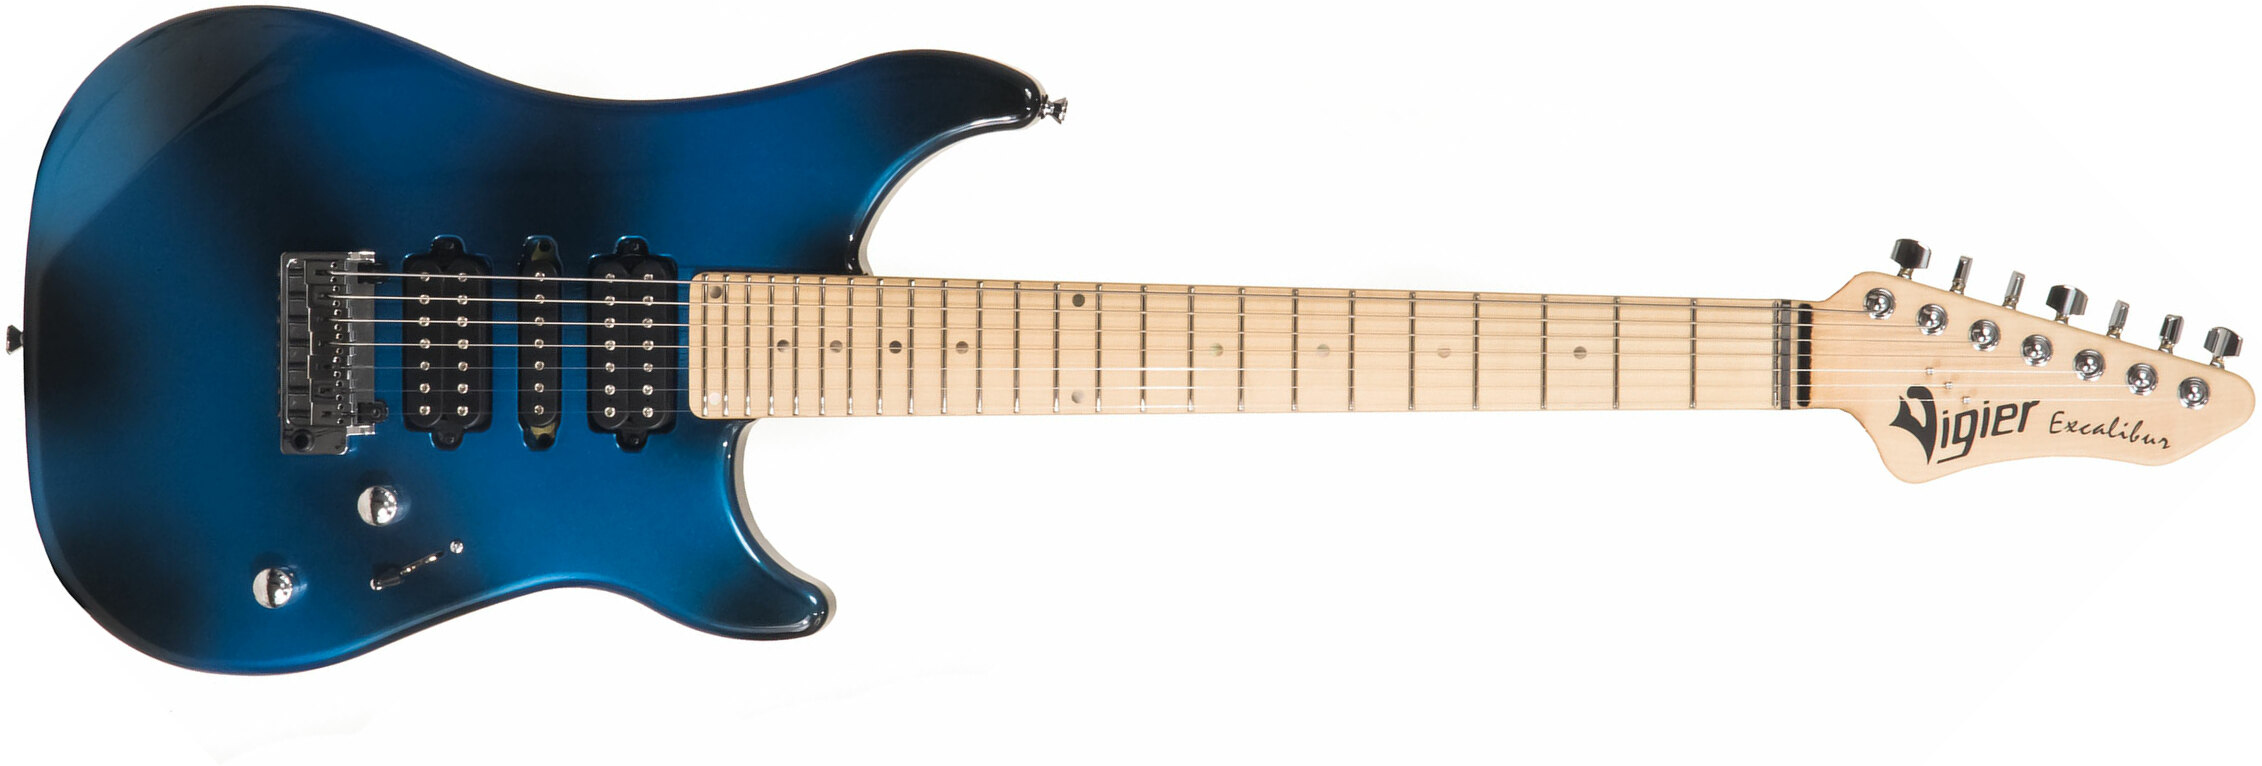 Vigier Excalibur Supra 7c Hsh Trem Mn - Urban Blue - 7-saitige E-Gitarre - Main picture